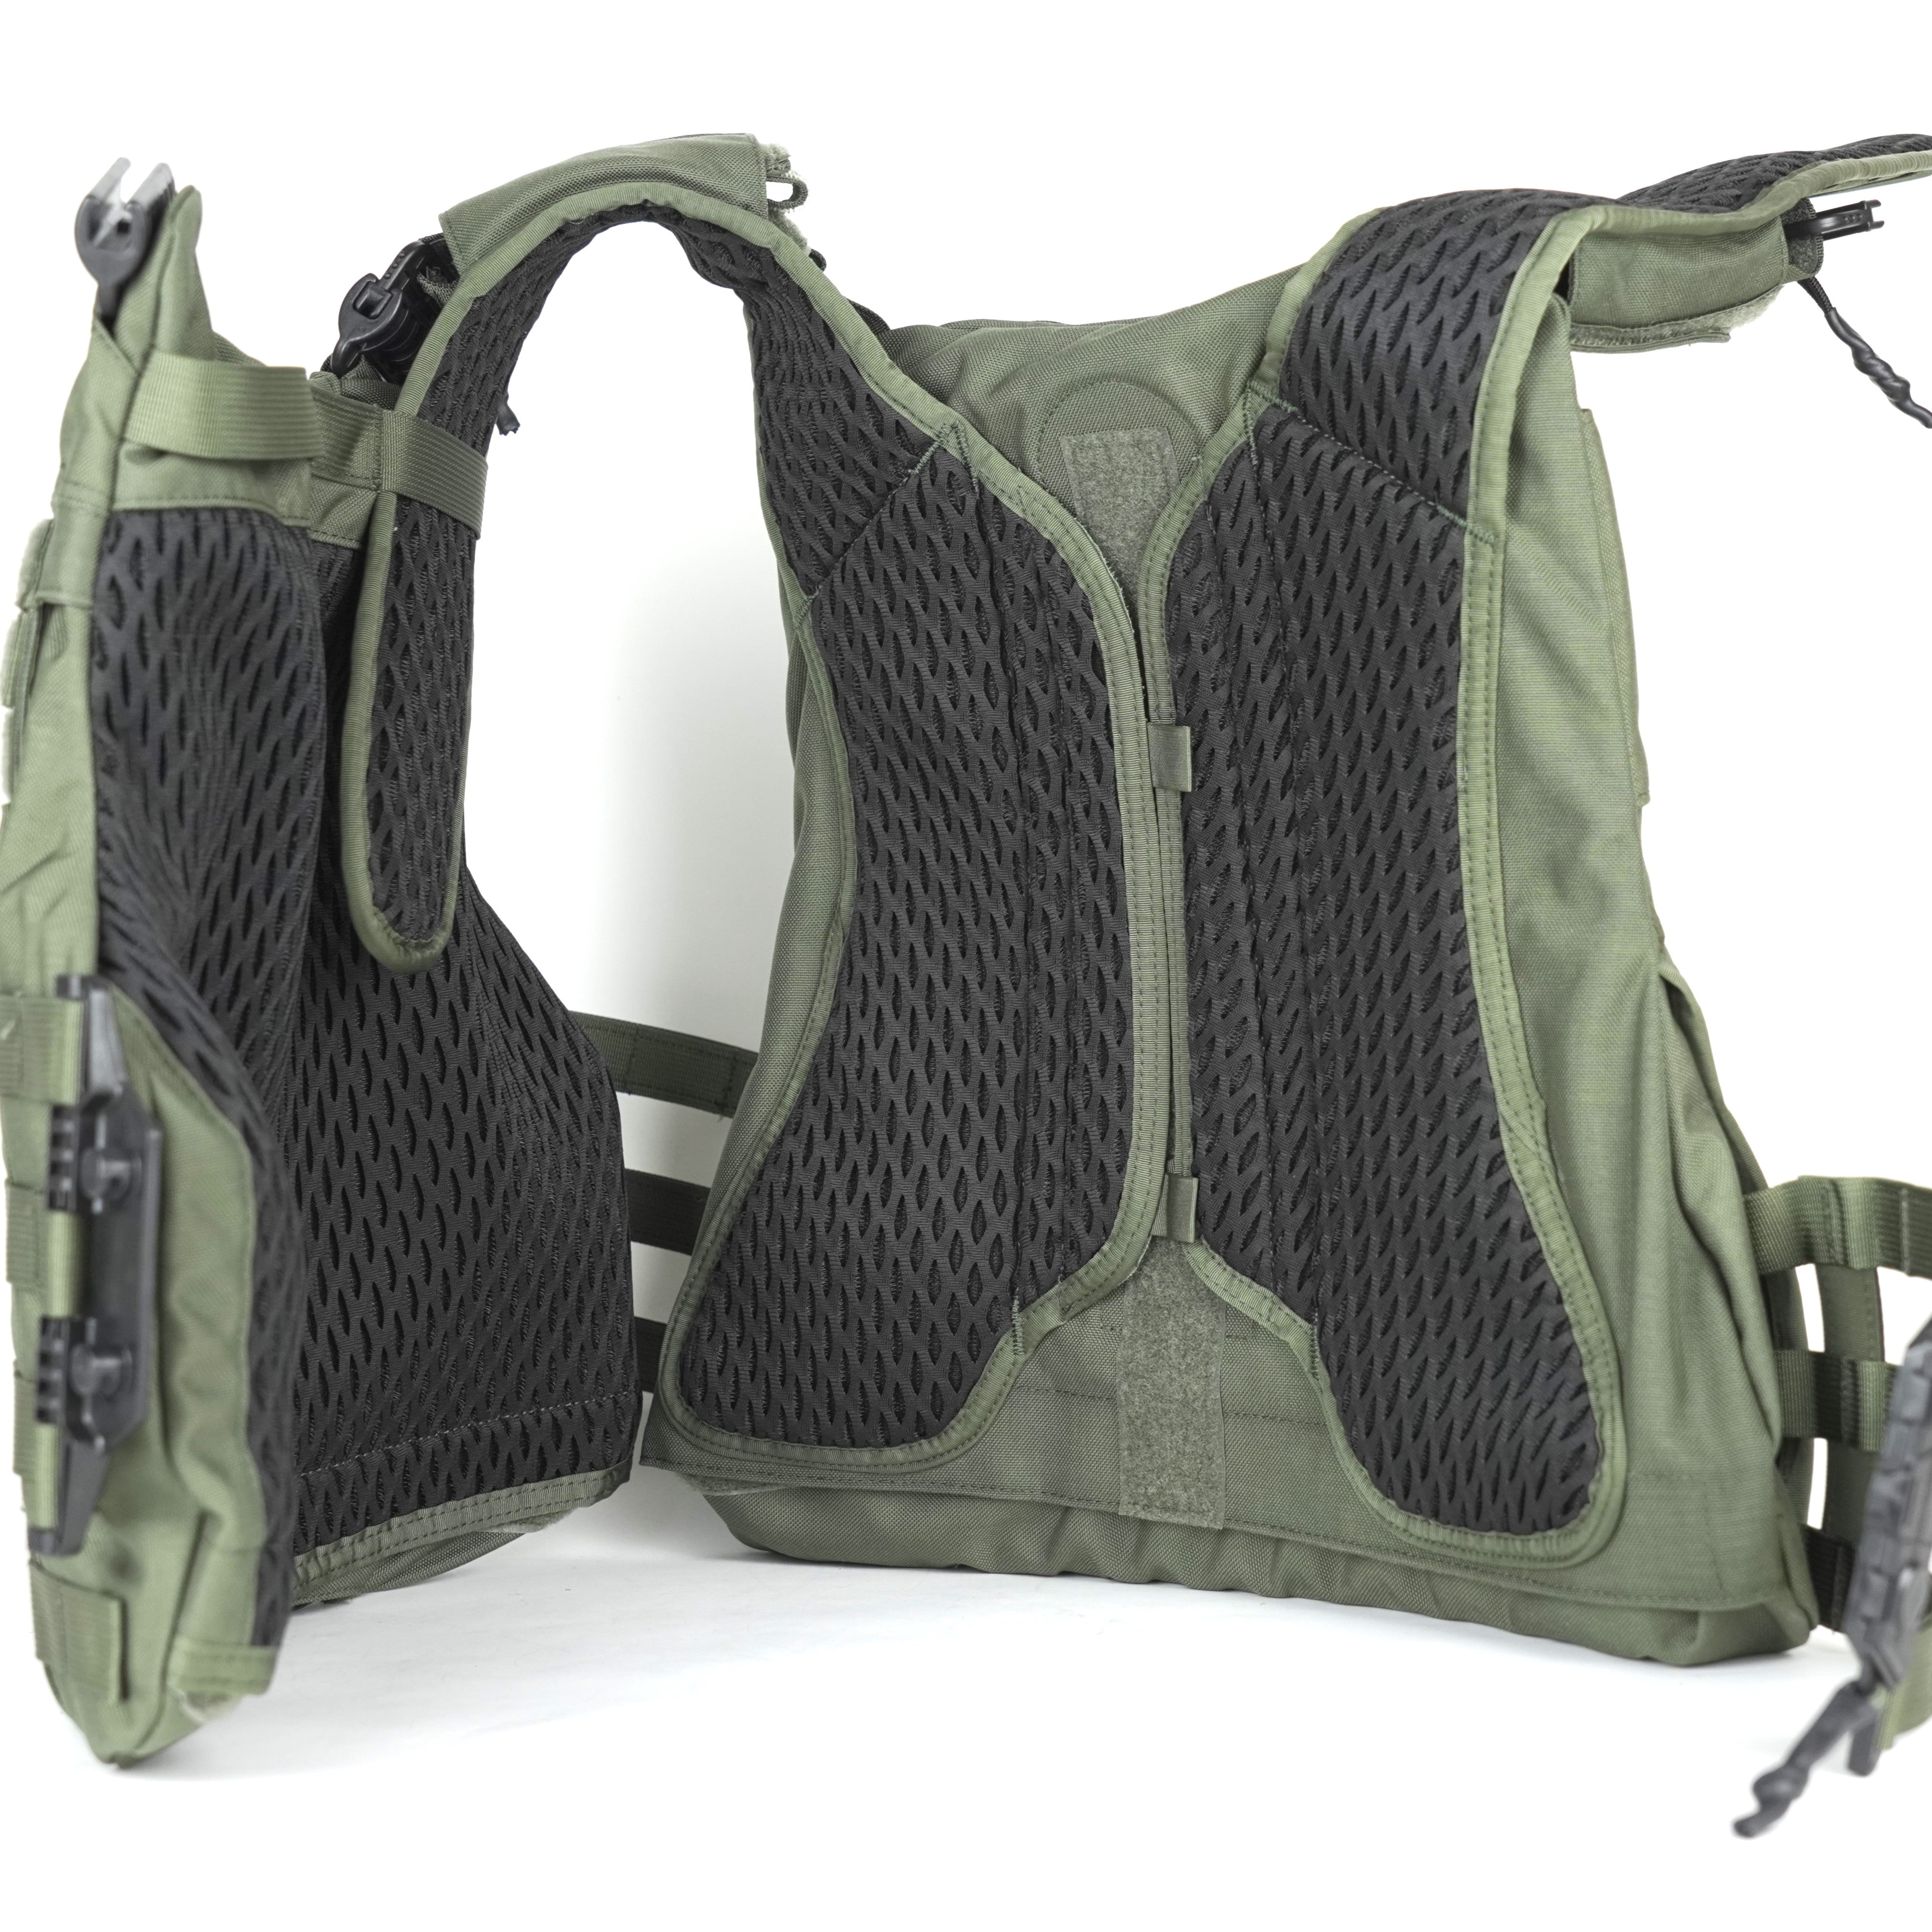 Commando vest - Pre-order for delivery in June 2024